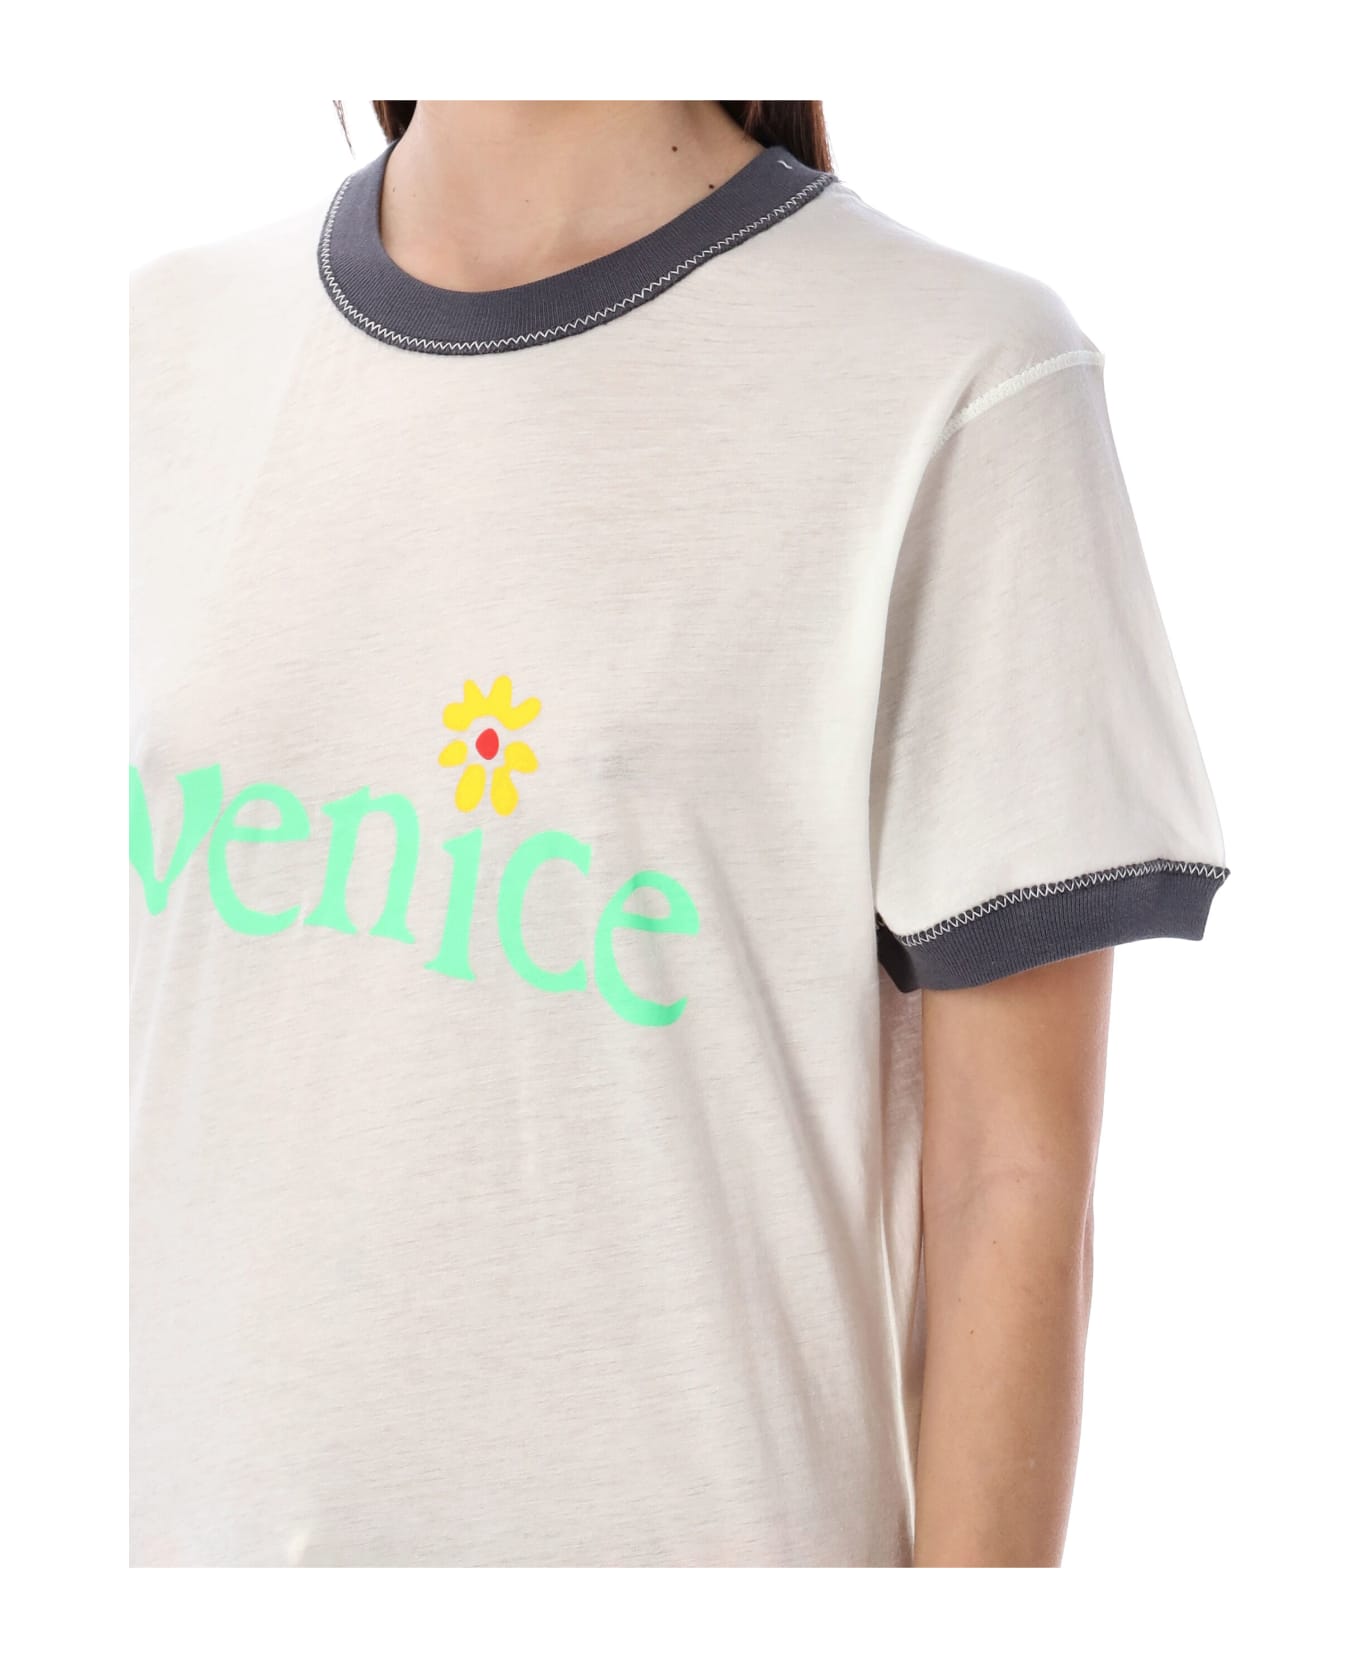 ERL Venice T-shirt - WHITE